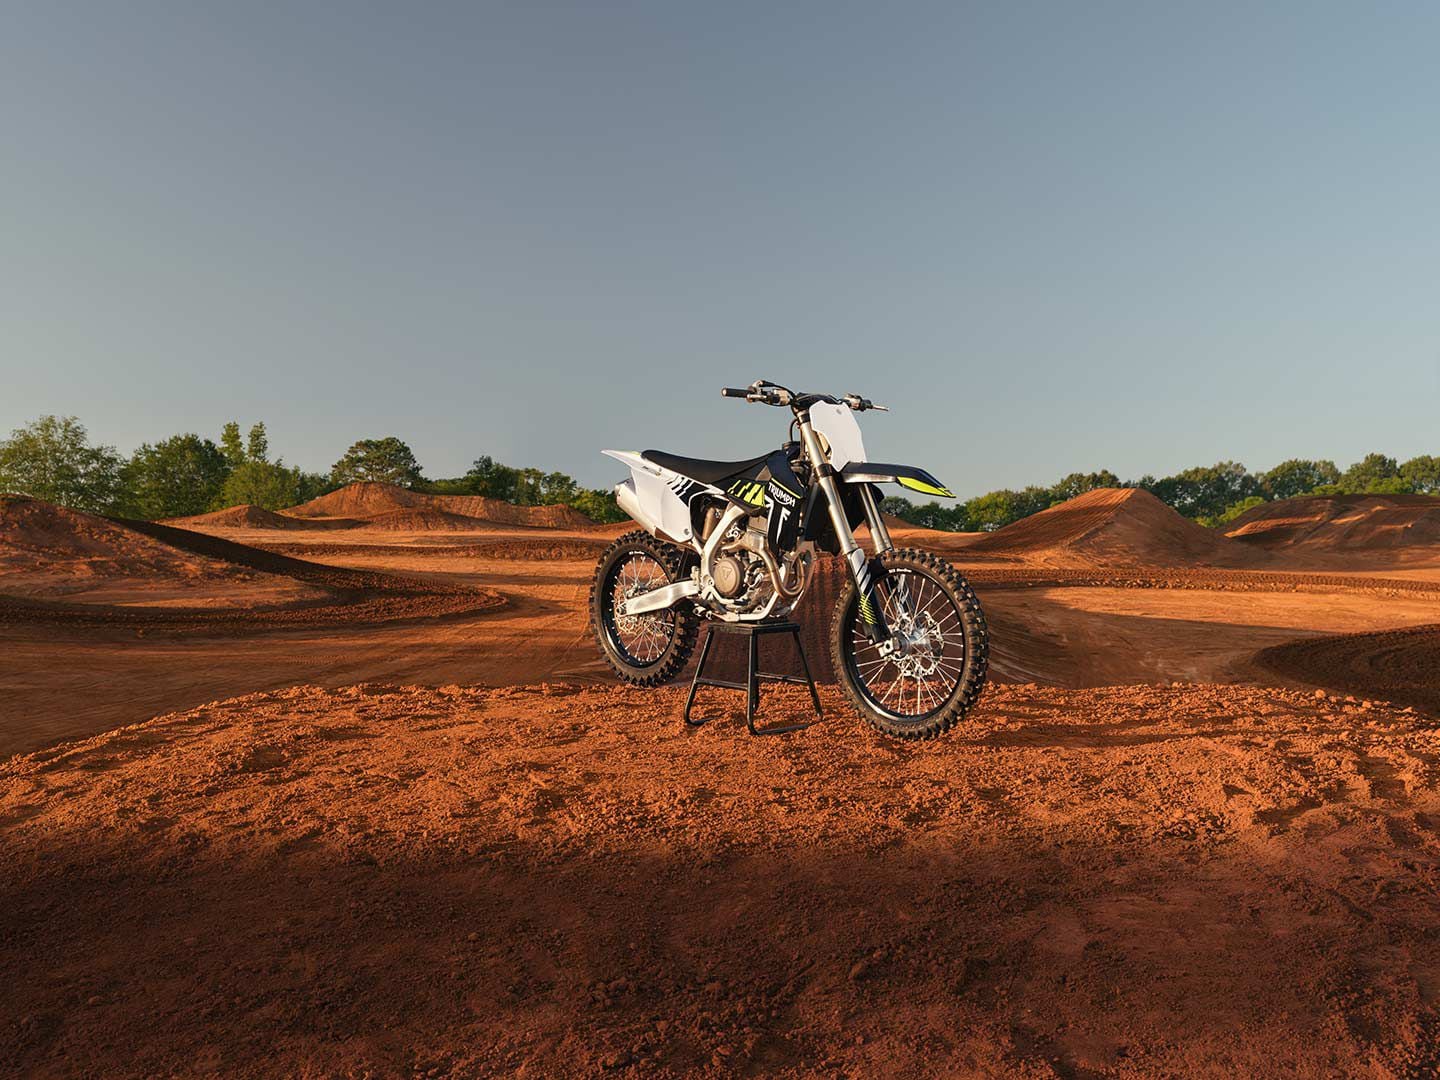 Meet the new Triumph TF 250-X motocross bike.